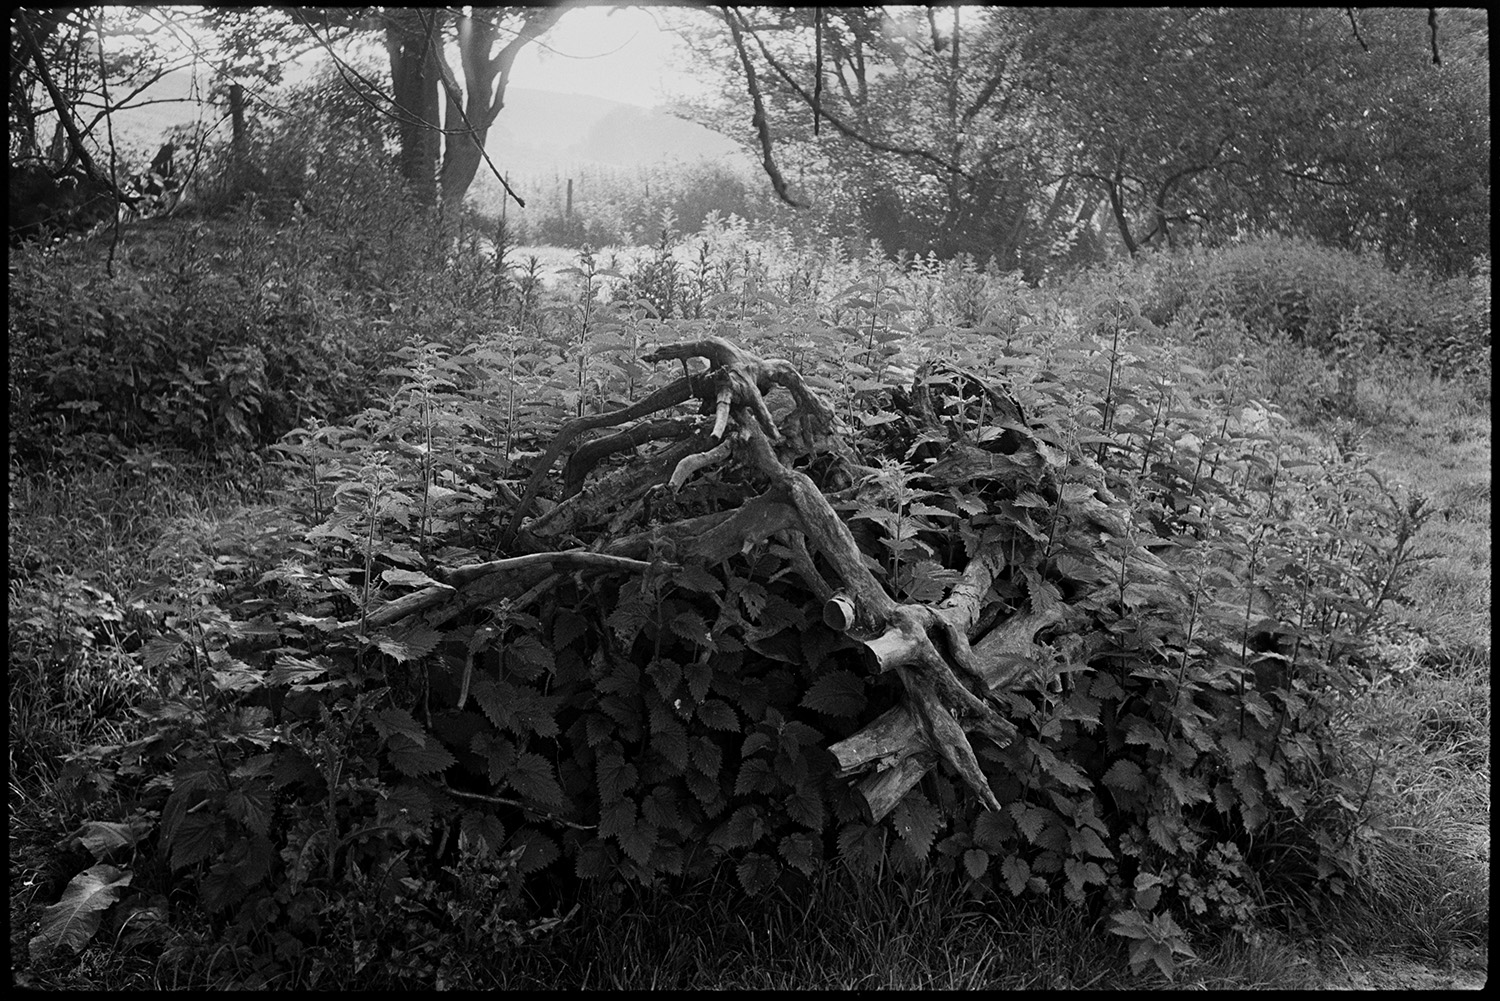 Nettles growing over fallen branches.
[Nettles growing around fallen tree branches by trees and a field entrance at Eggesford.]